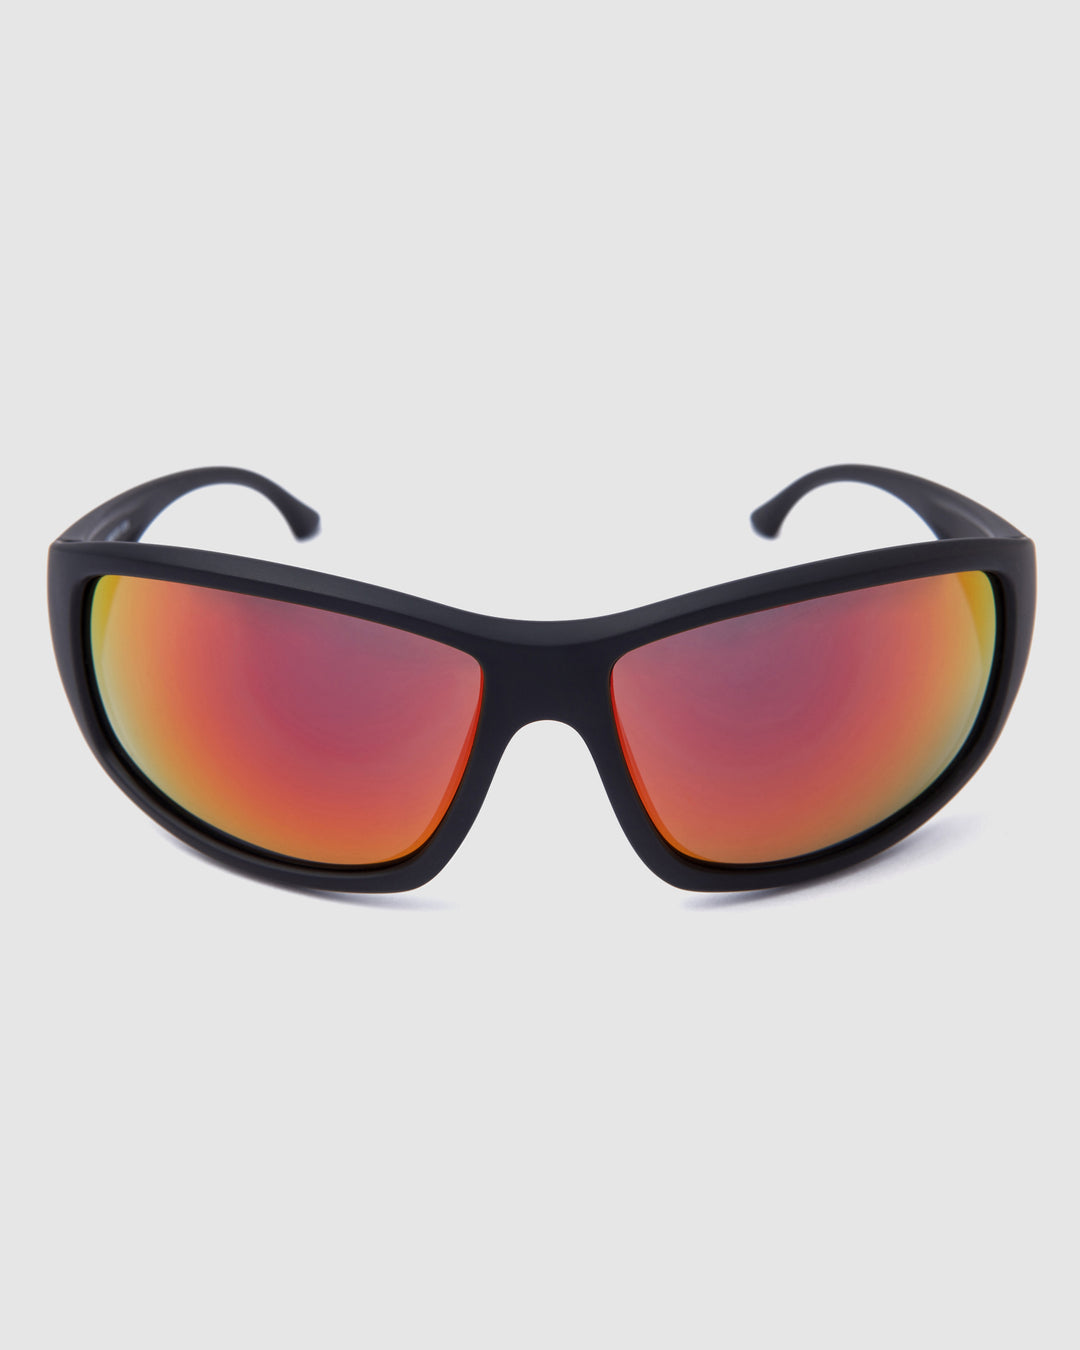 UNIT Strike - Medium Impact Safety Sunglasses - Black Orange